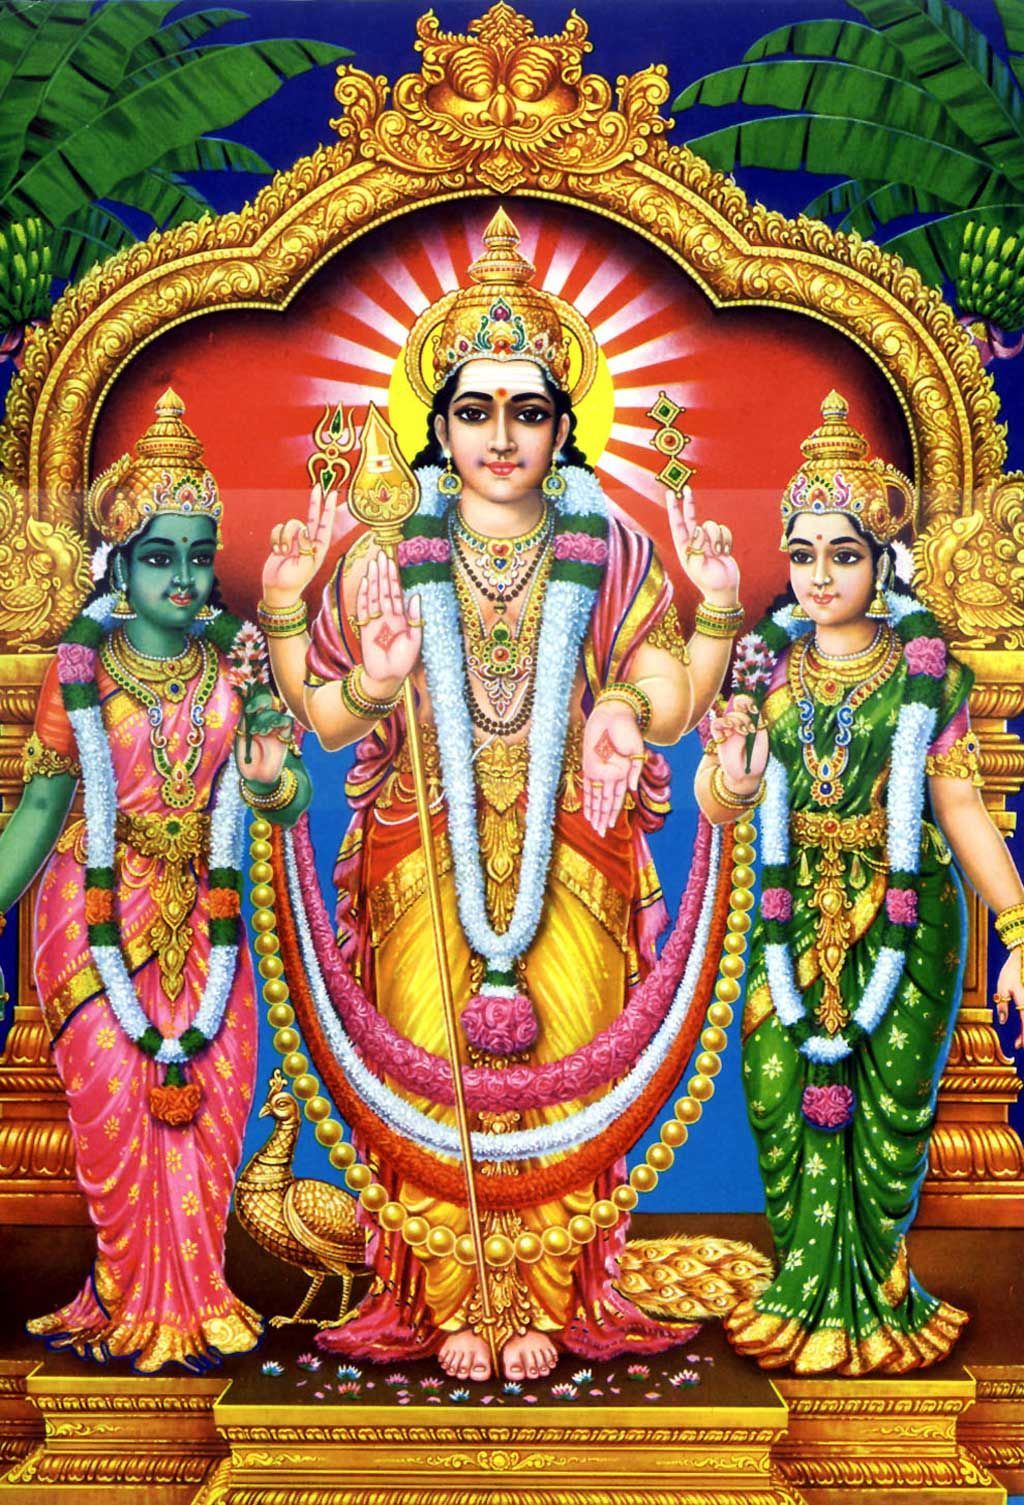 Kartikeya had 2 wife's. He married Valli by love and married